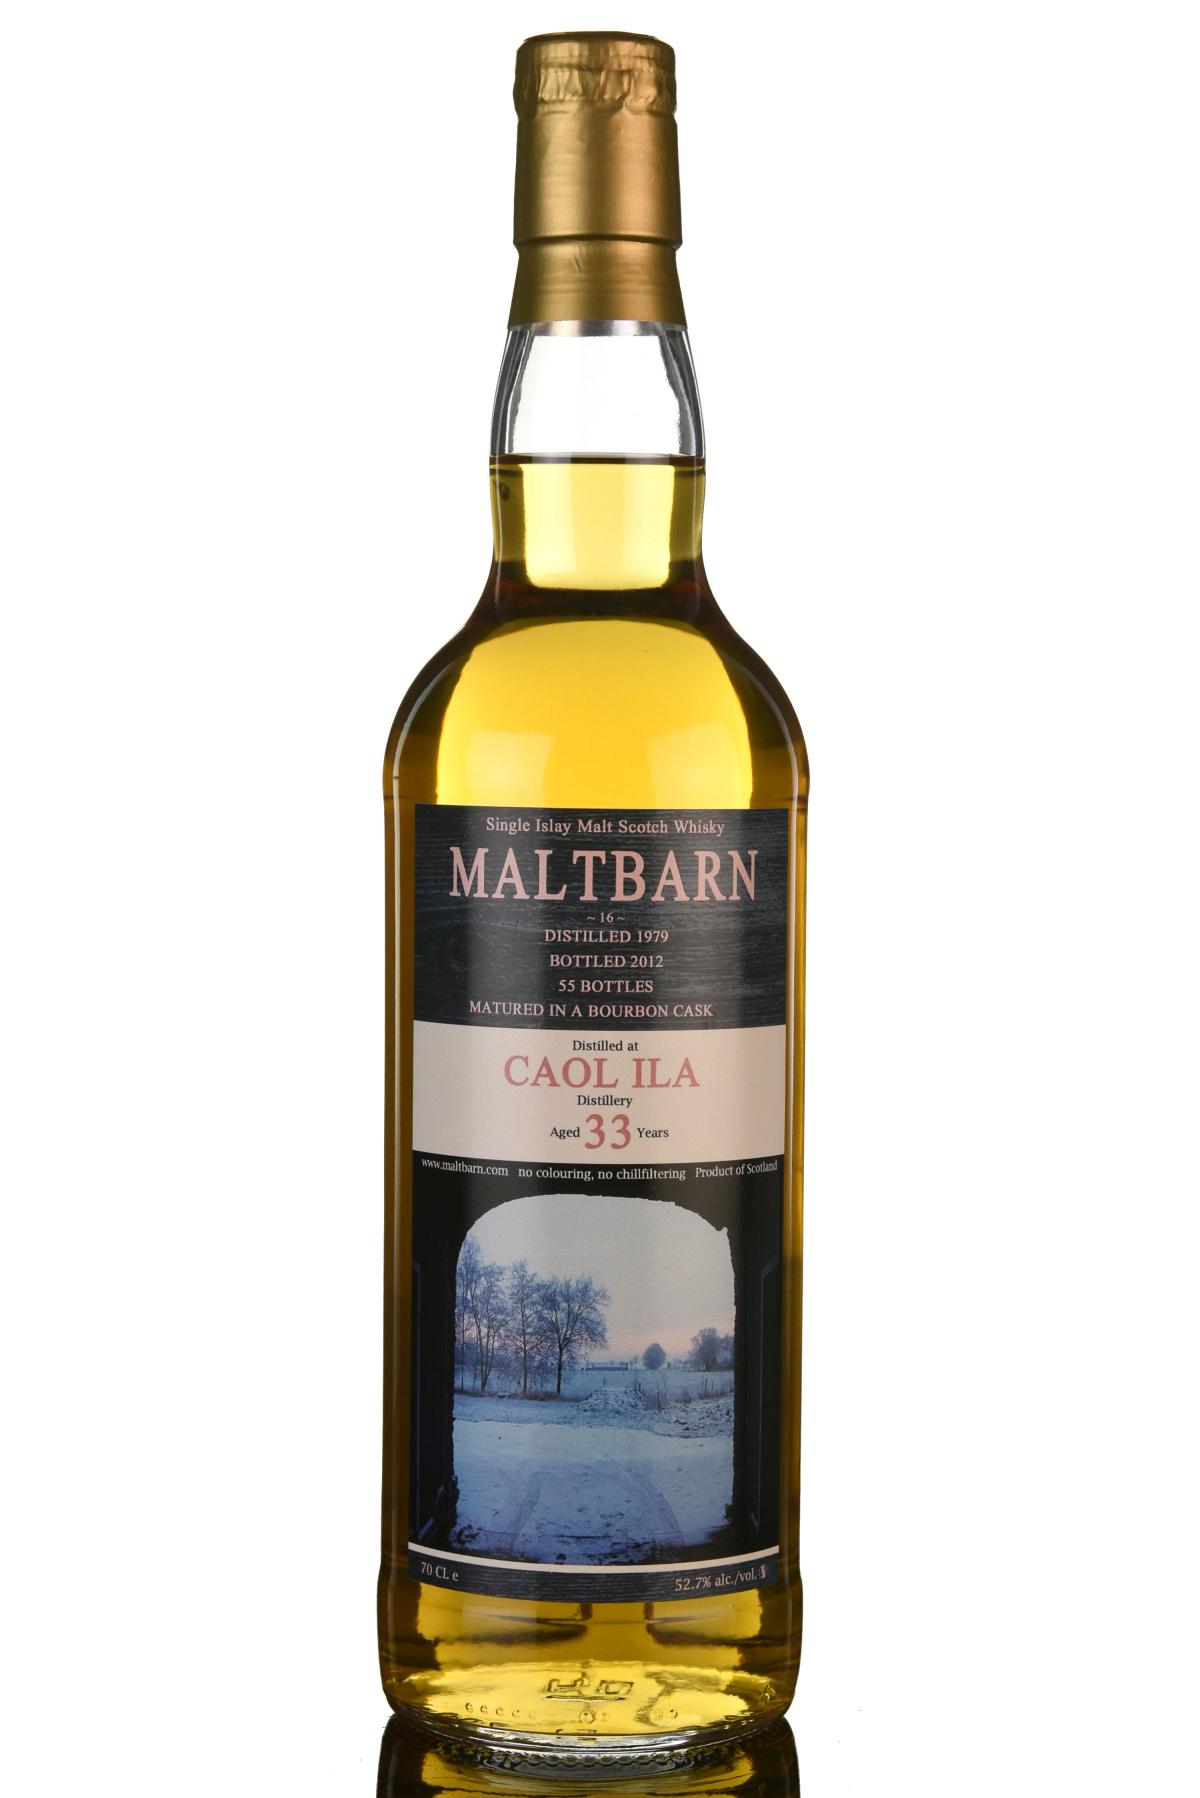 Caol Ila 1979-2012 - 33 Year Old - Maltbarn - 55 Bottles